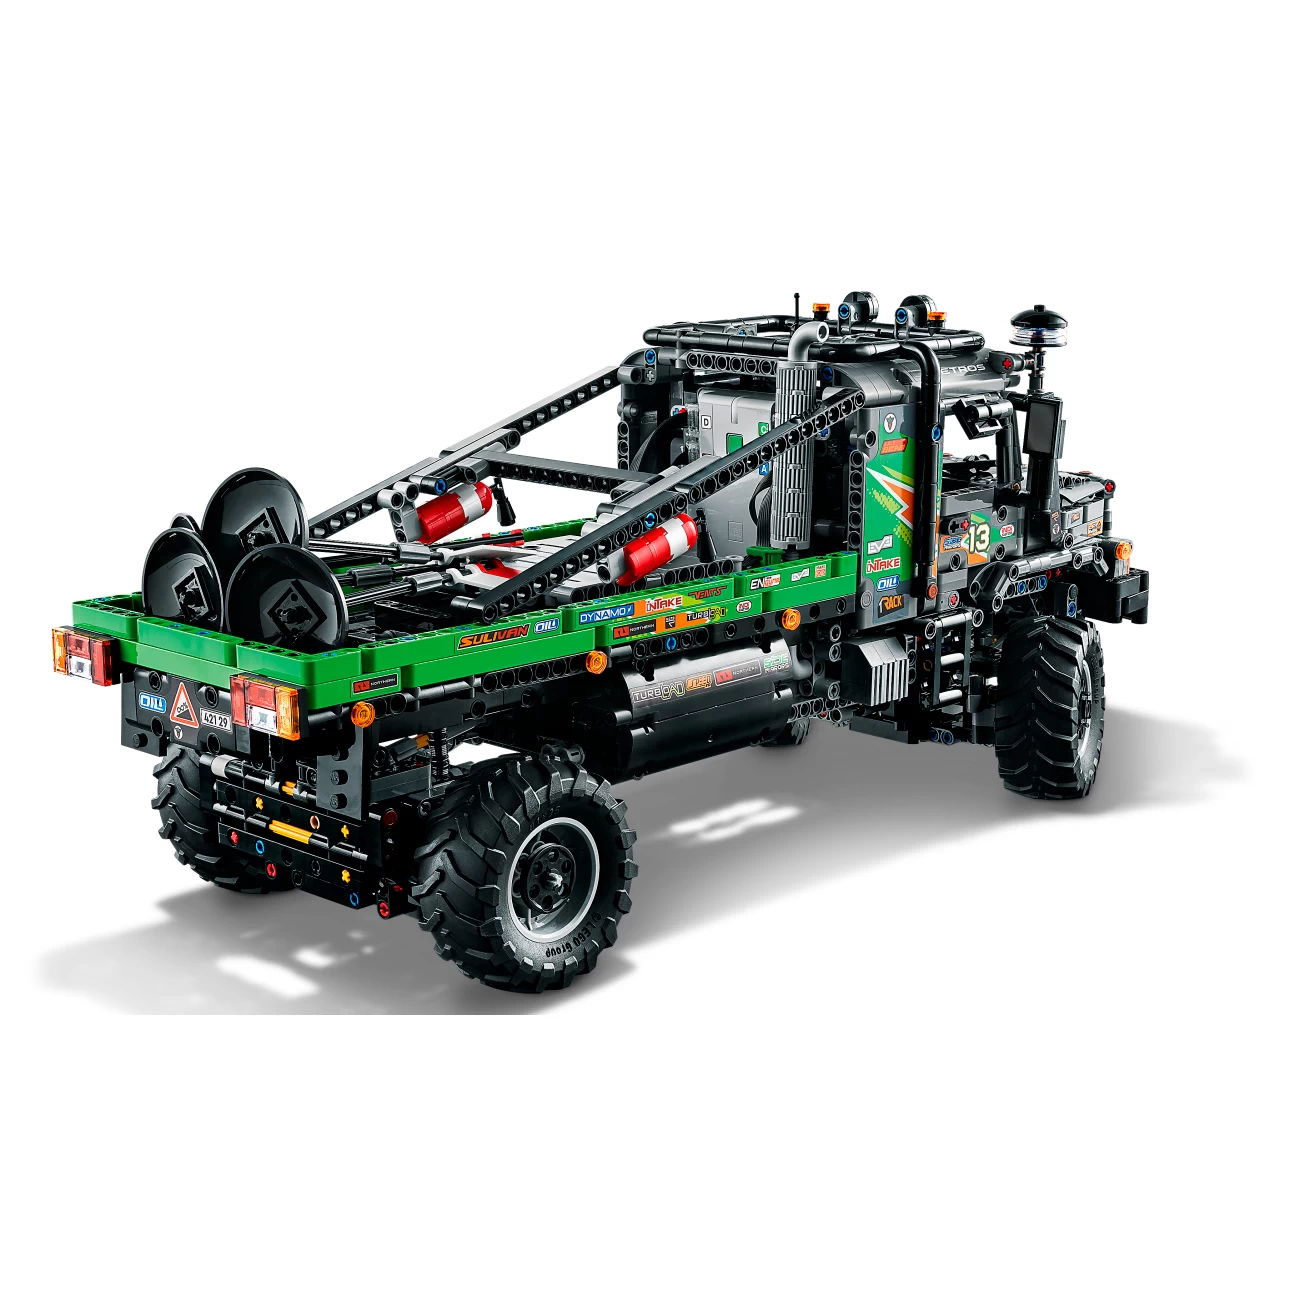 LEGO Technic 42129 - 4x4 Mercedes-Benz Zetros Offroad-Truck